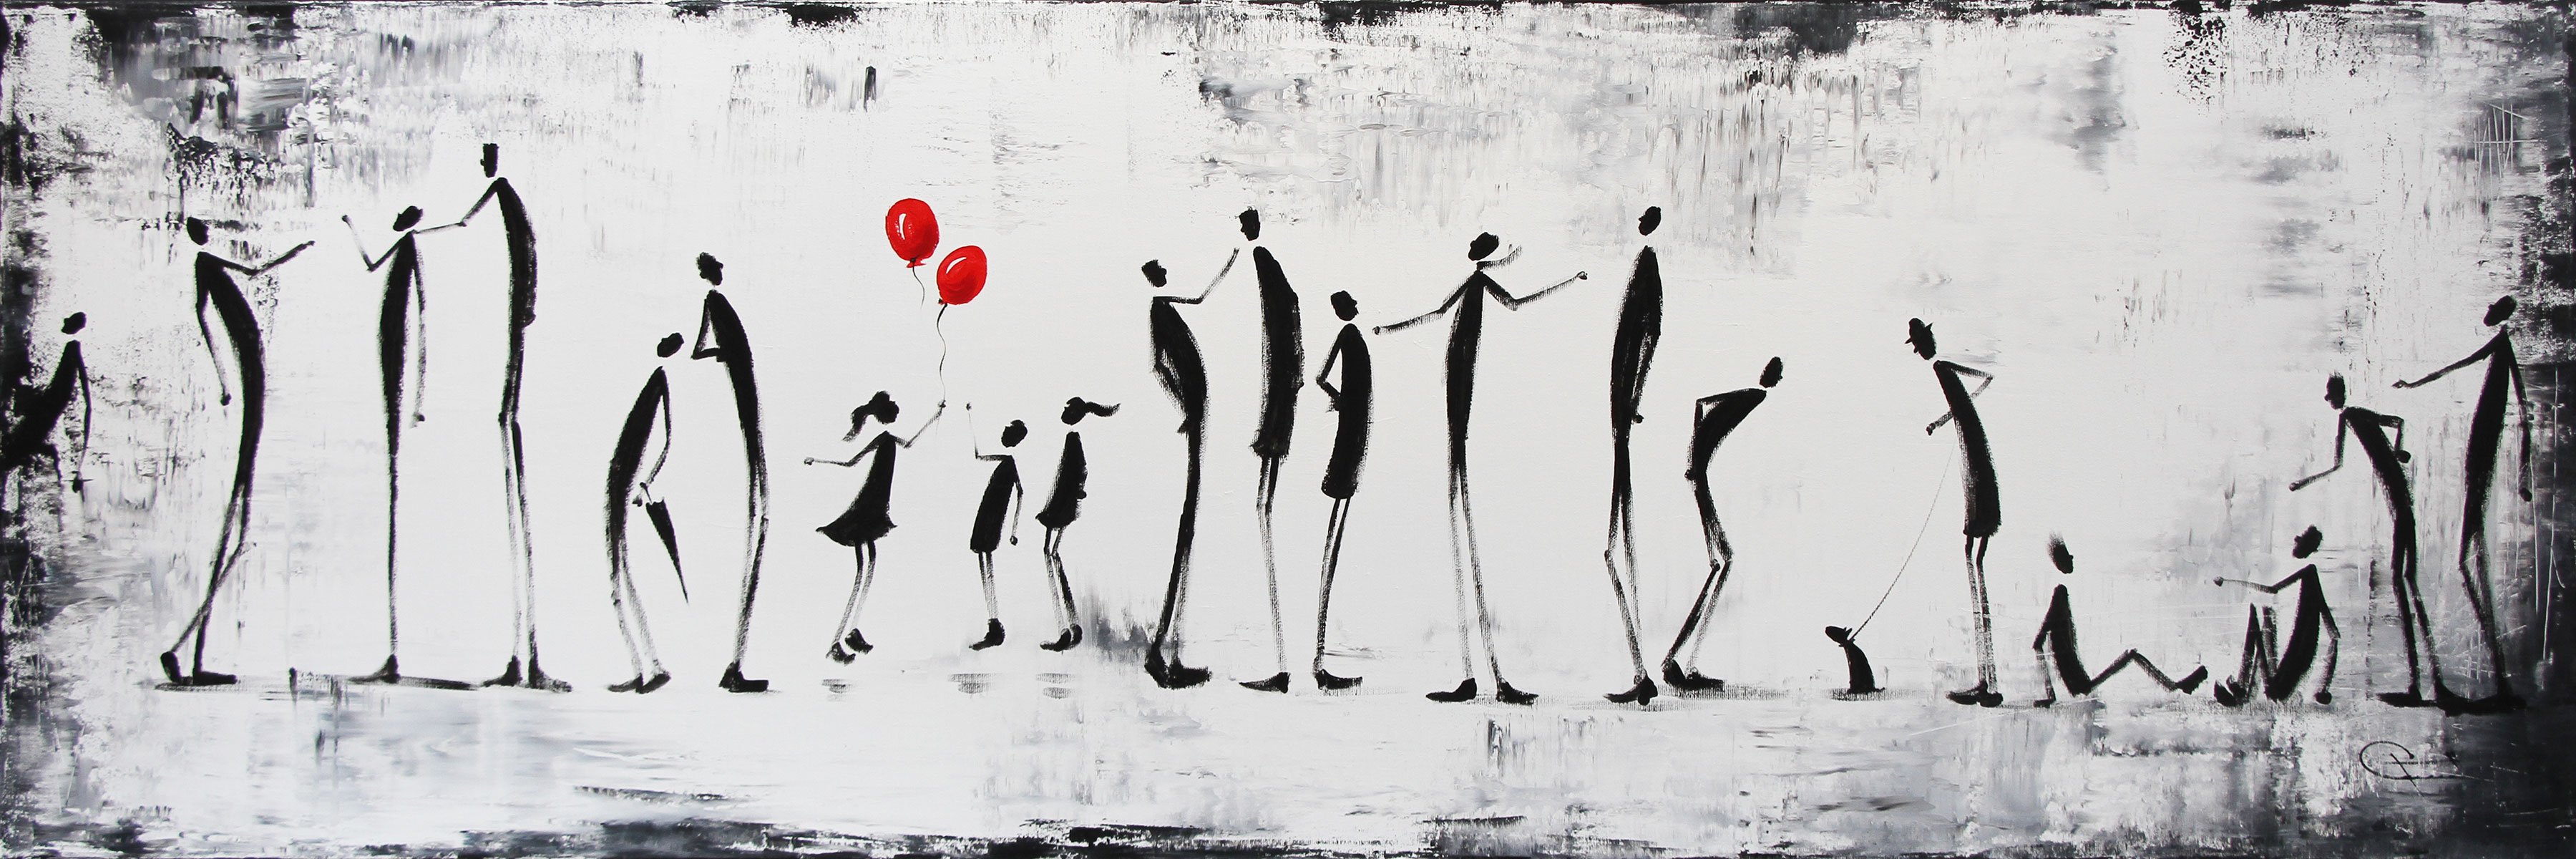 Red Balloon kunst  kopen